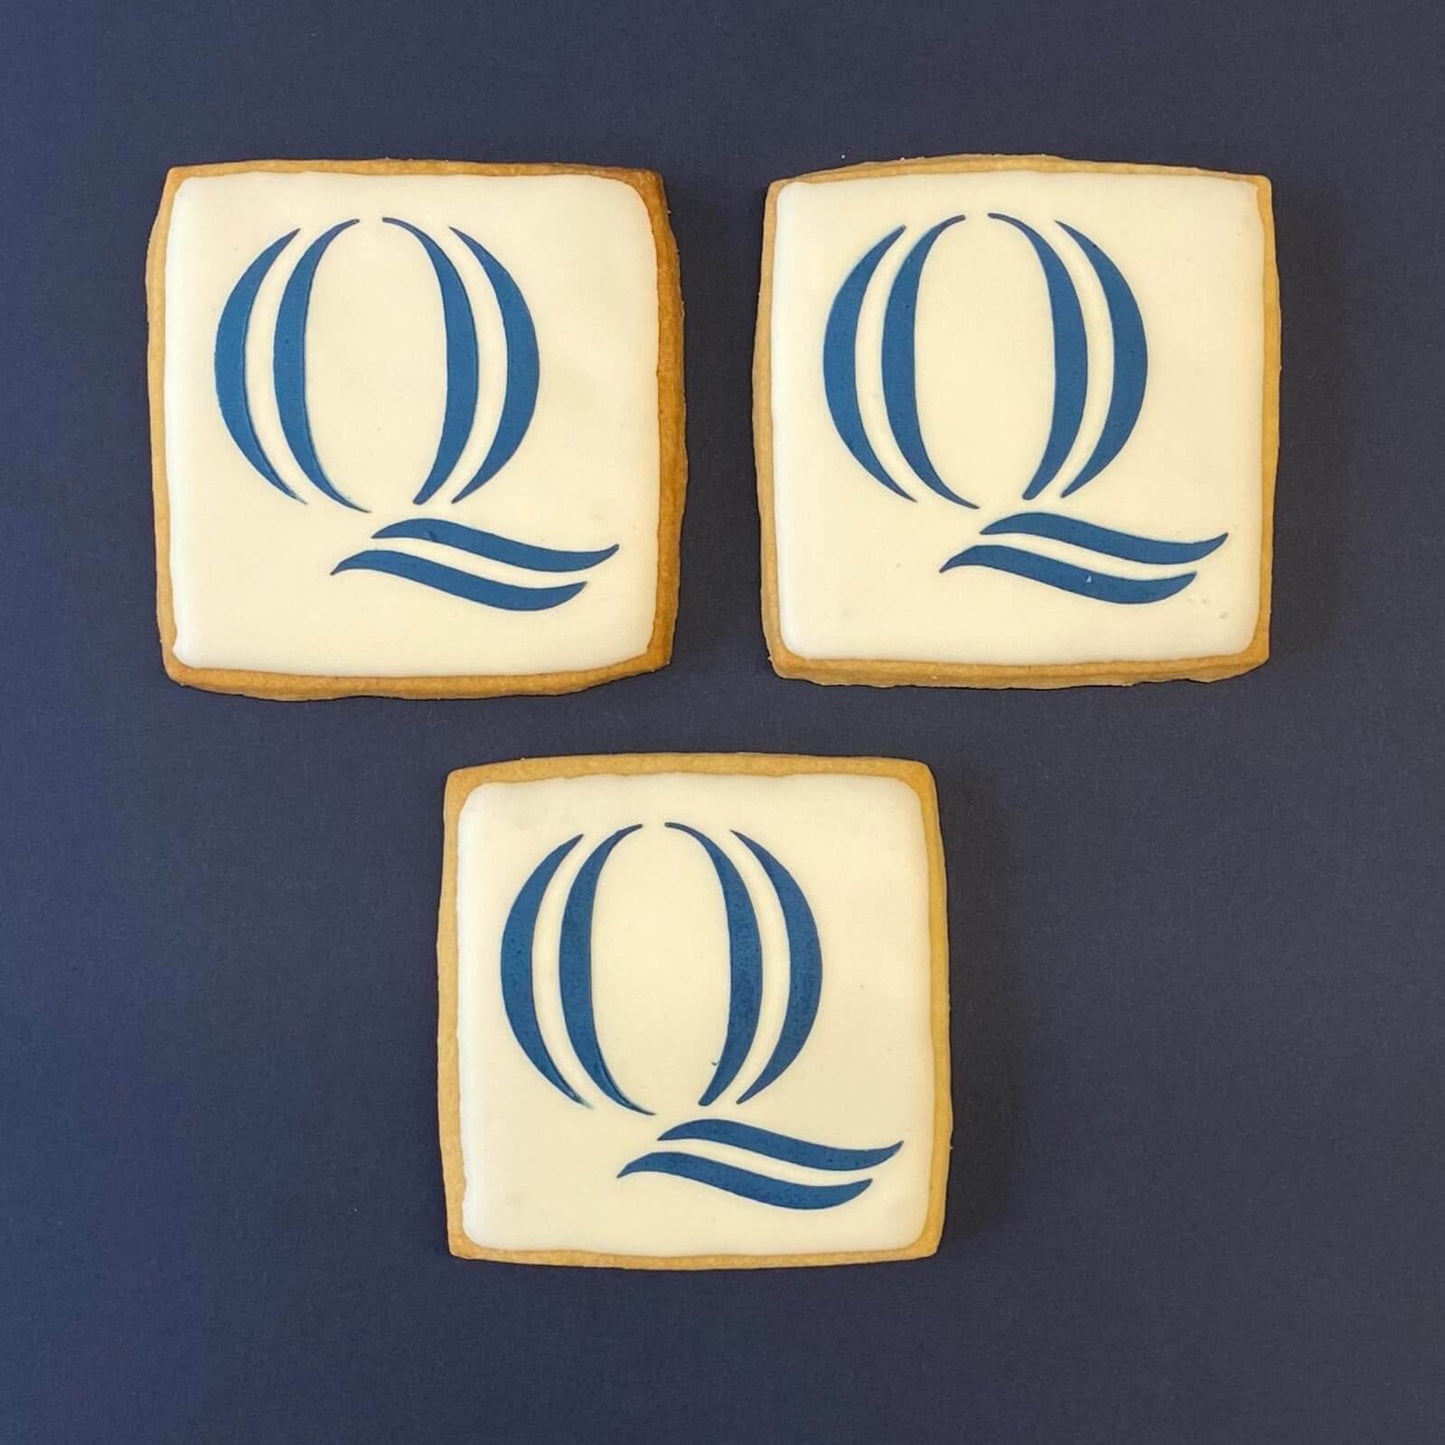 QU - Mascot Cookies